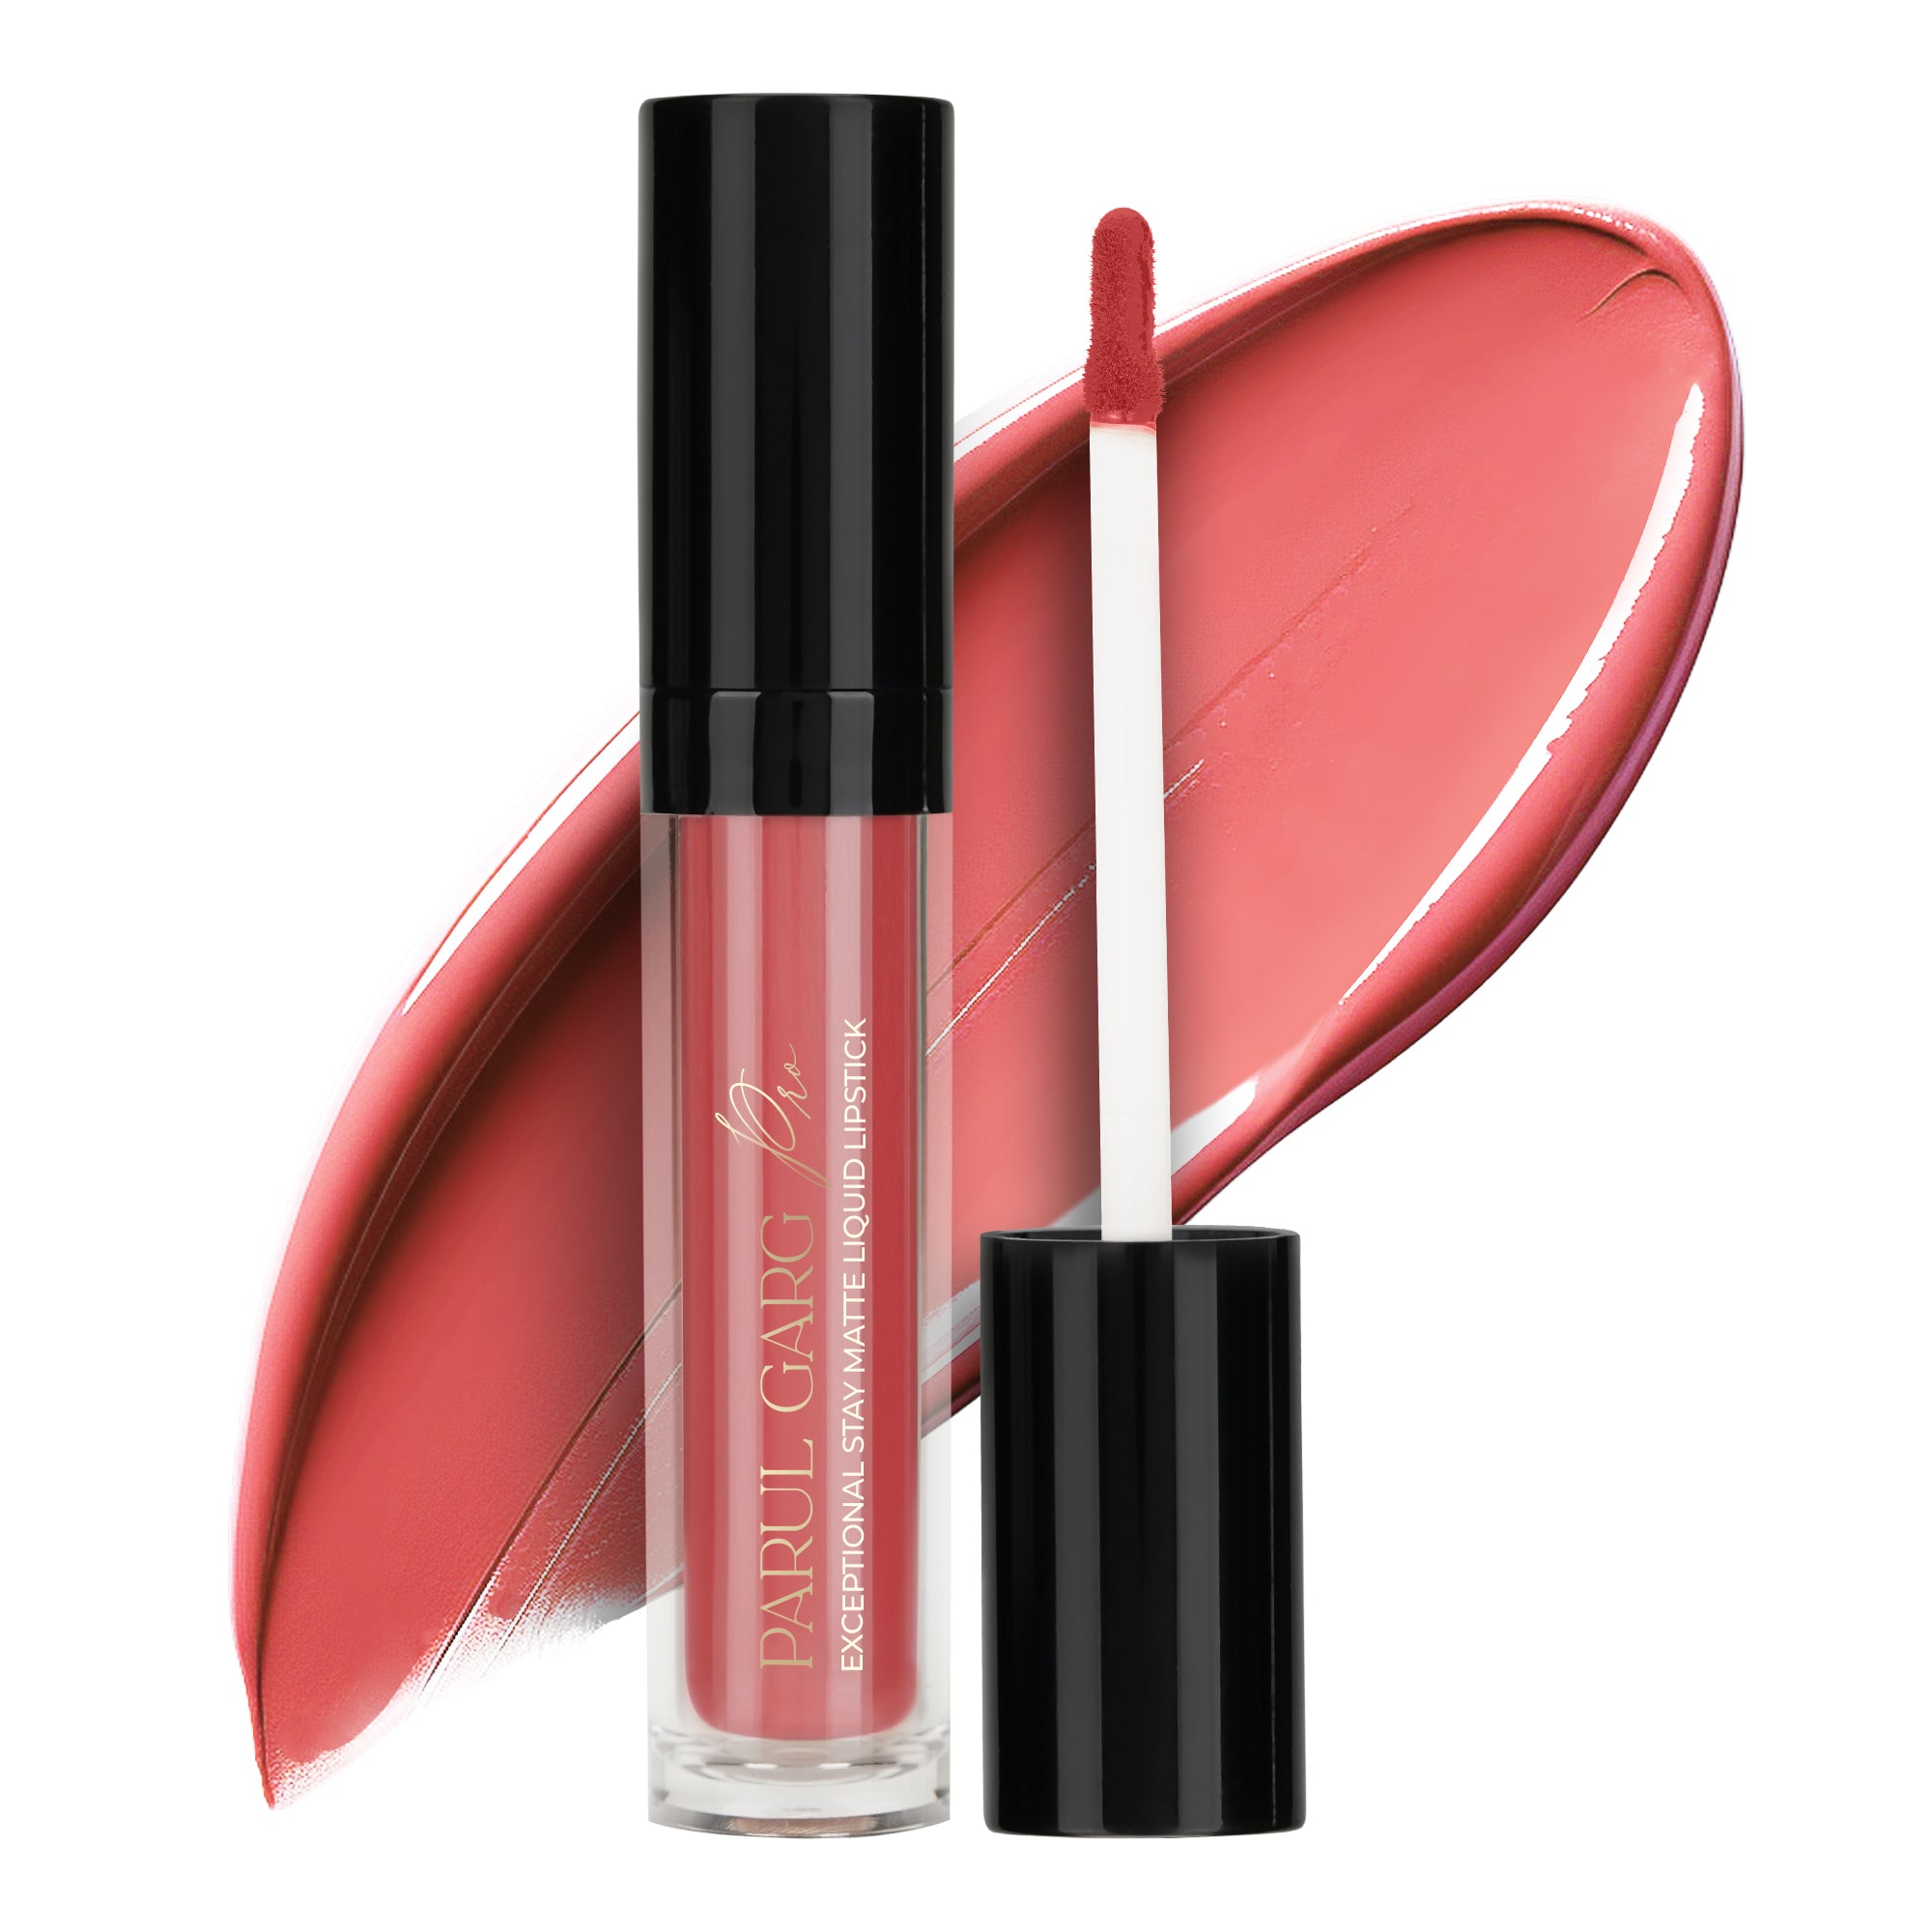 Exceptional Stay Matte Liquid Lipstick Shade: Tulip 15